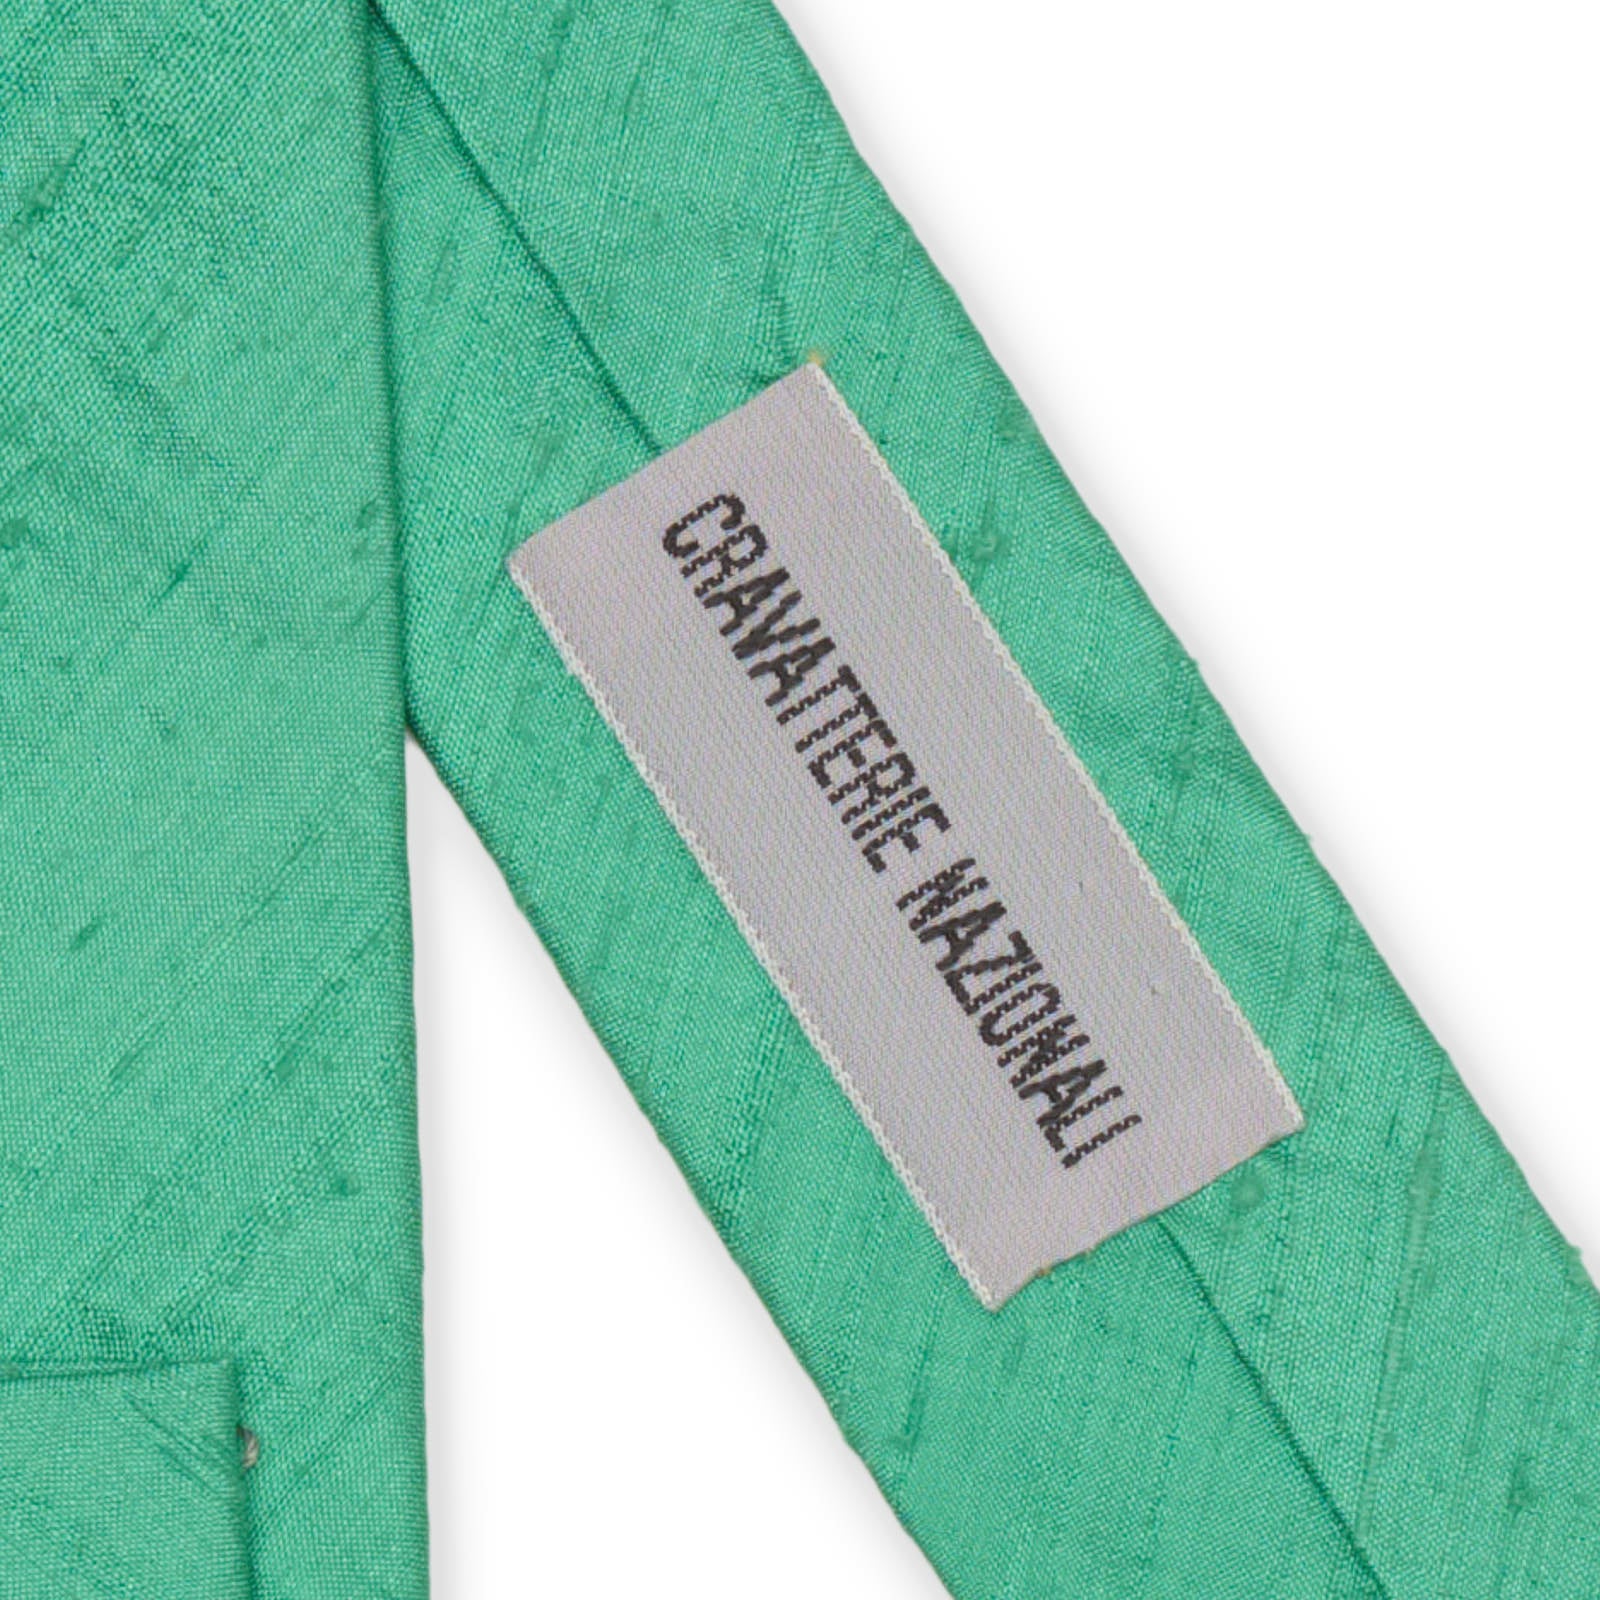 CRAVATTERIE NAZIONALI Green Raw Silk Tie NEW